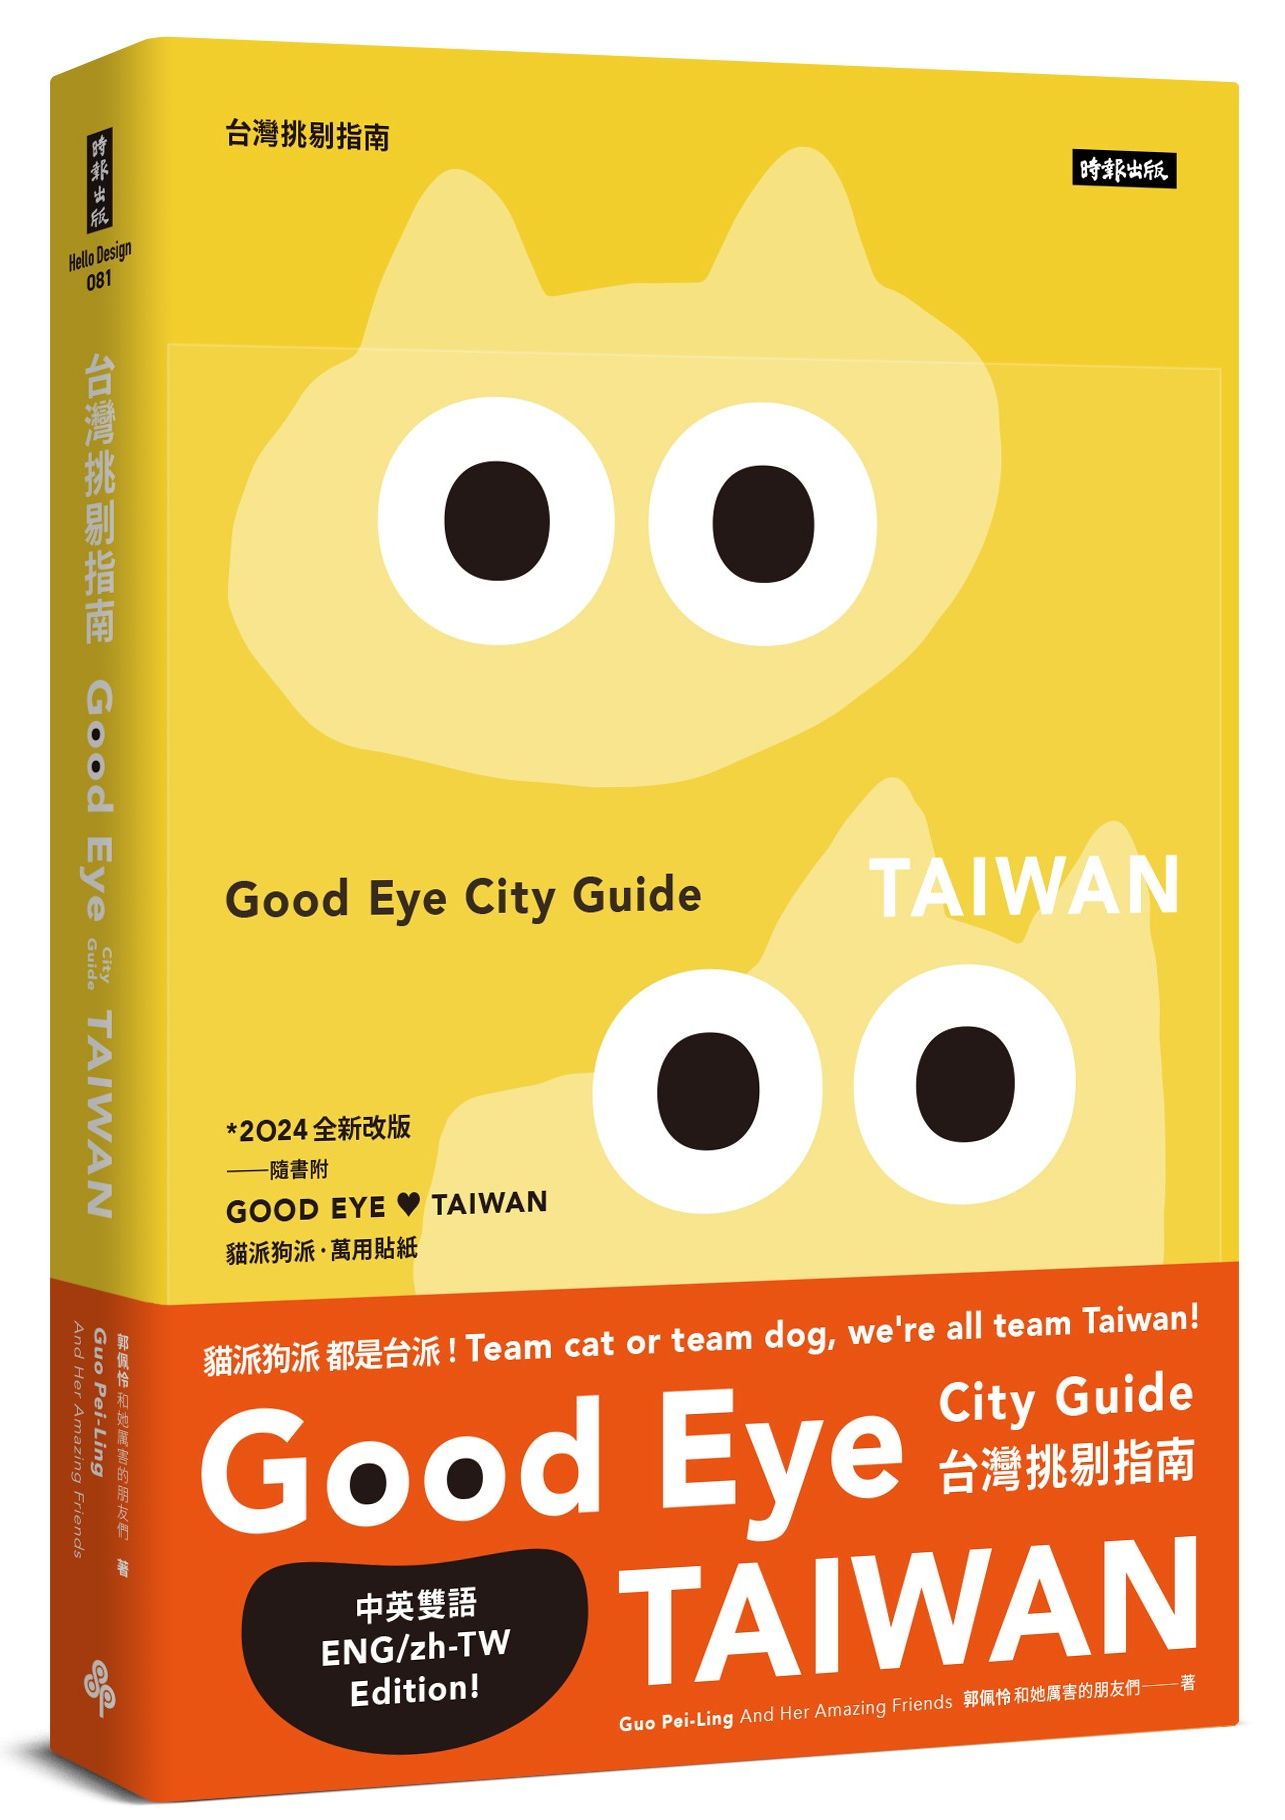 Good Eye台灣挑剔指南: 第一本讓世界認識台灣的中英文風格旅遊書 (全新改版/附貓派狗派萬用貼紙)